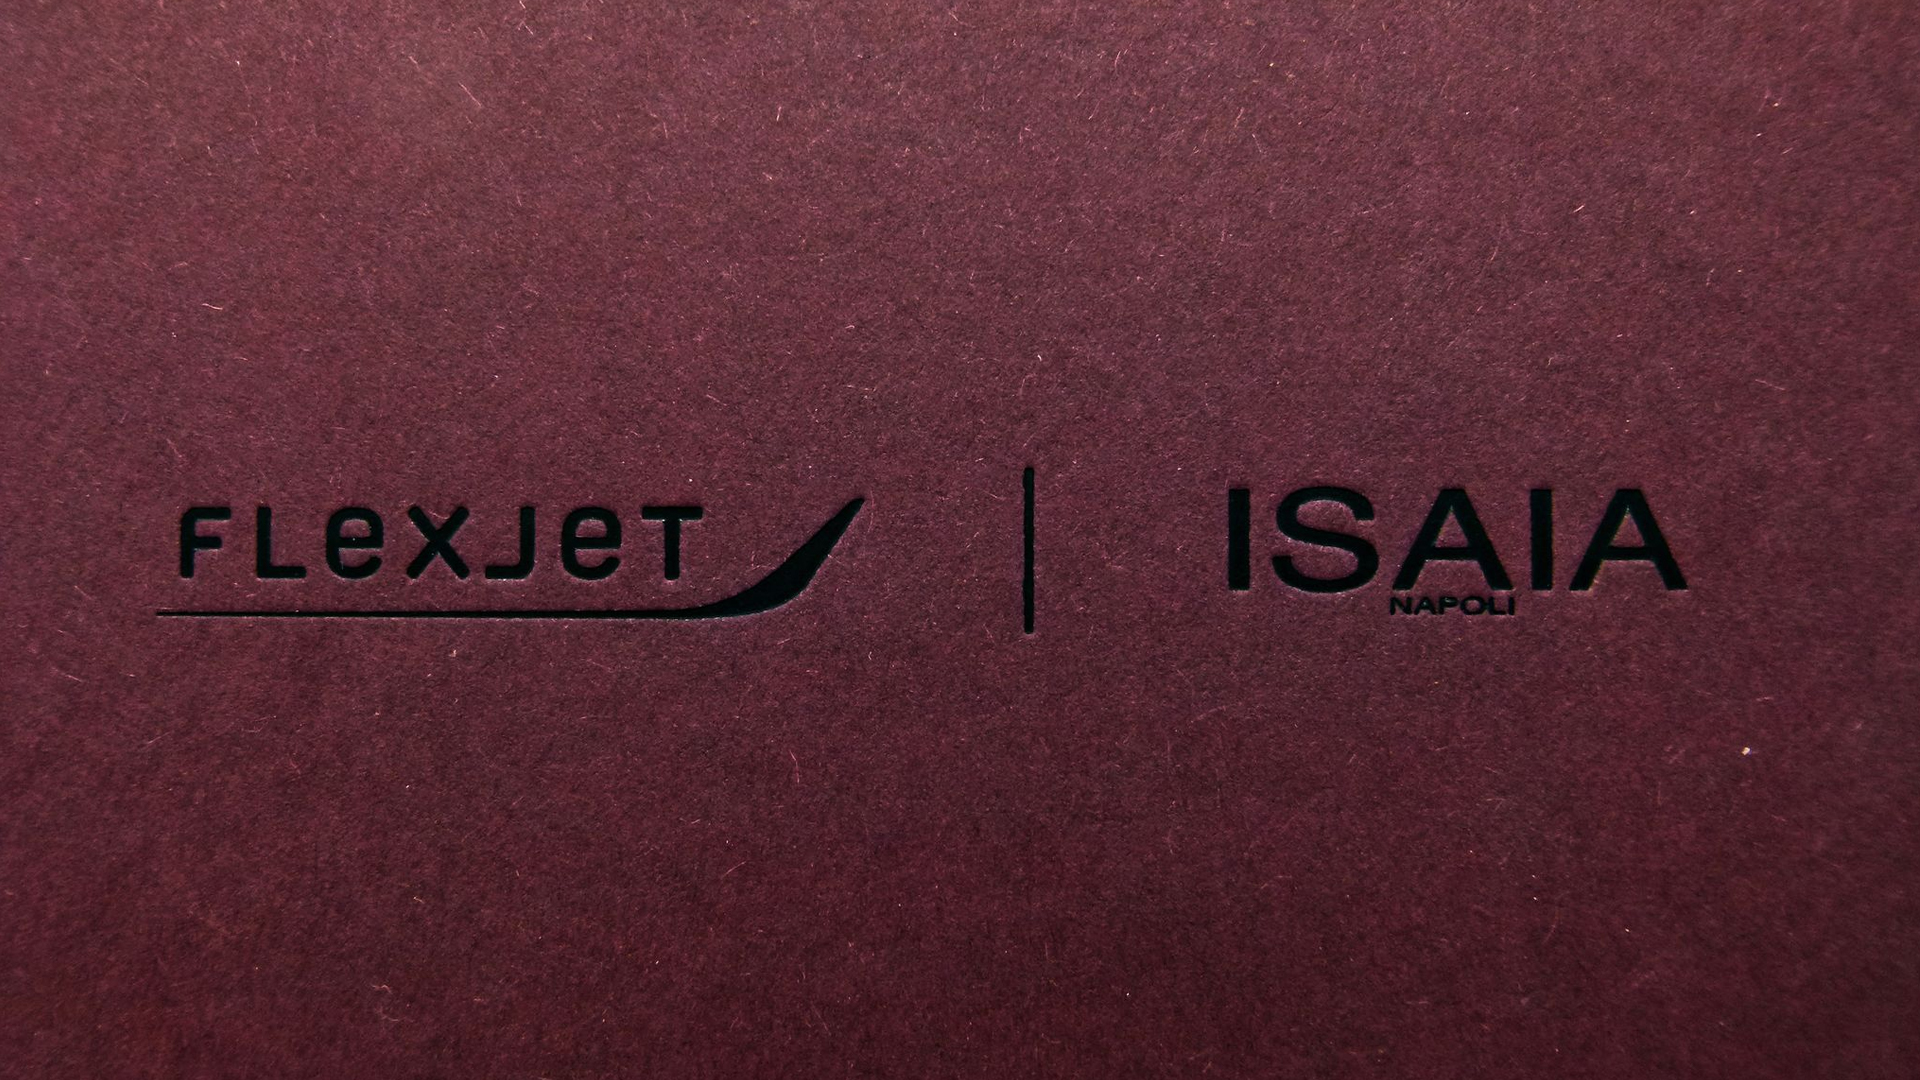 Flexjet-ISAIA Fashion Show Invitation - PaperSpecs